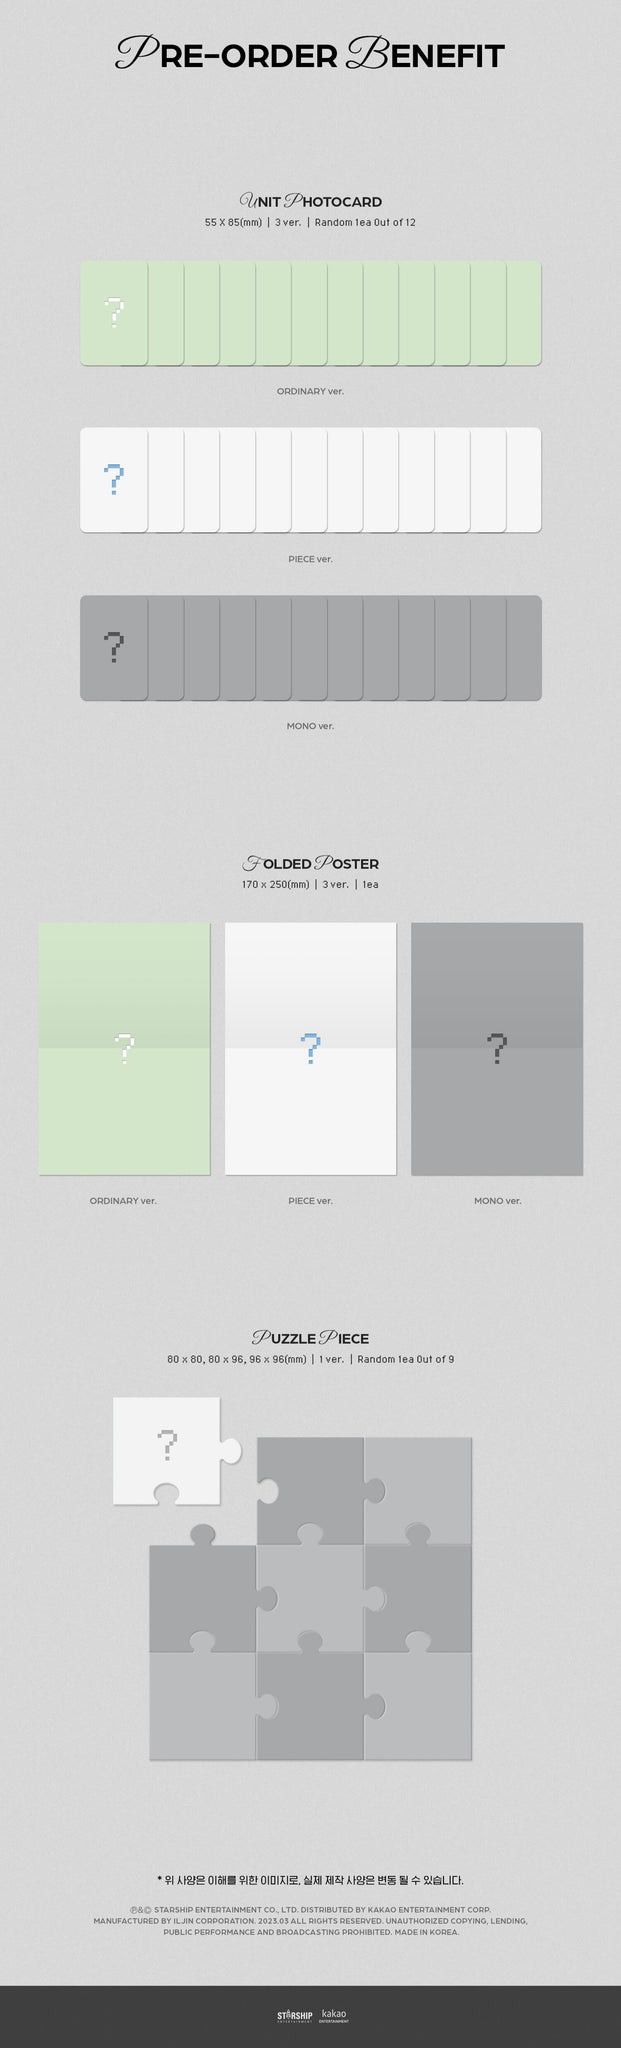 CRAVITY 5th Mini Album MASTER:PIECE Inclusions Pre-Order Benefits Unit Photocard Folded Poster Puzzle Piece